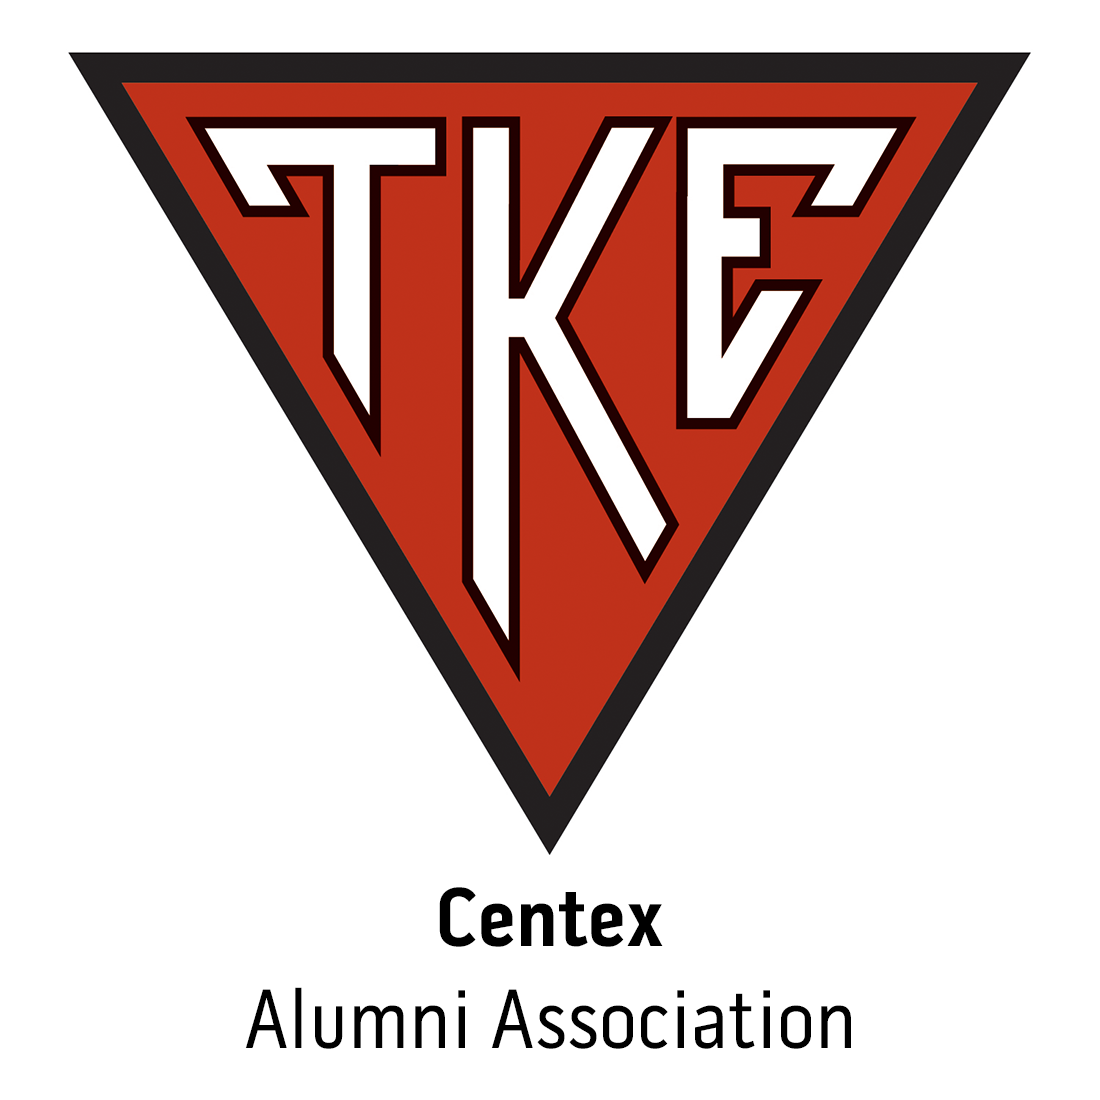 Centex Alumni Association at Central Texas